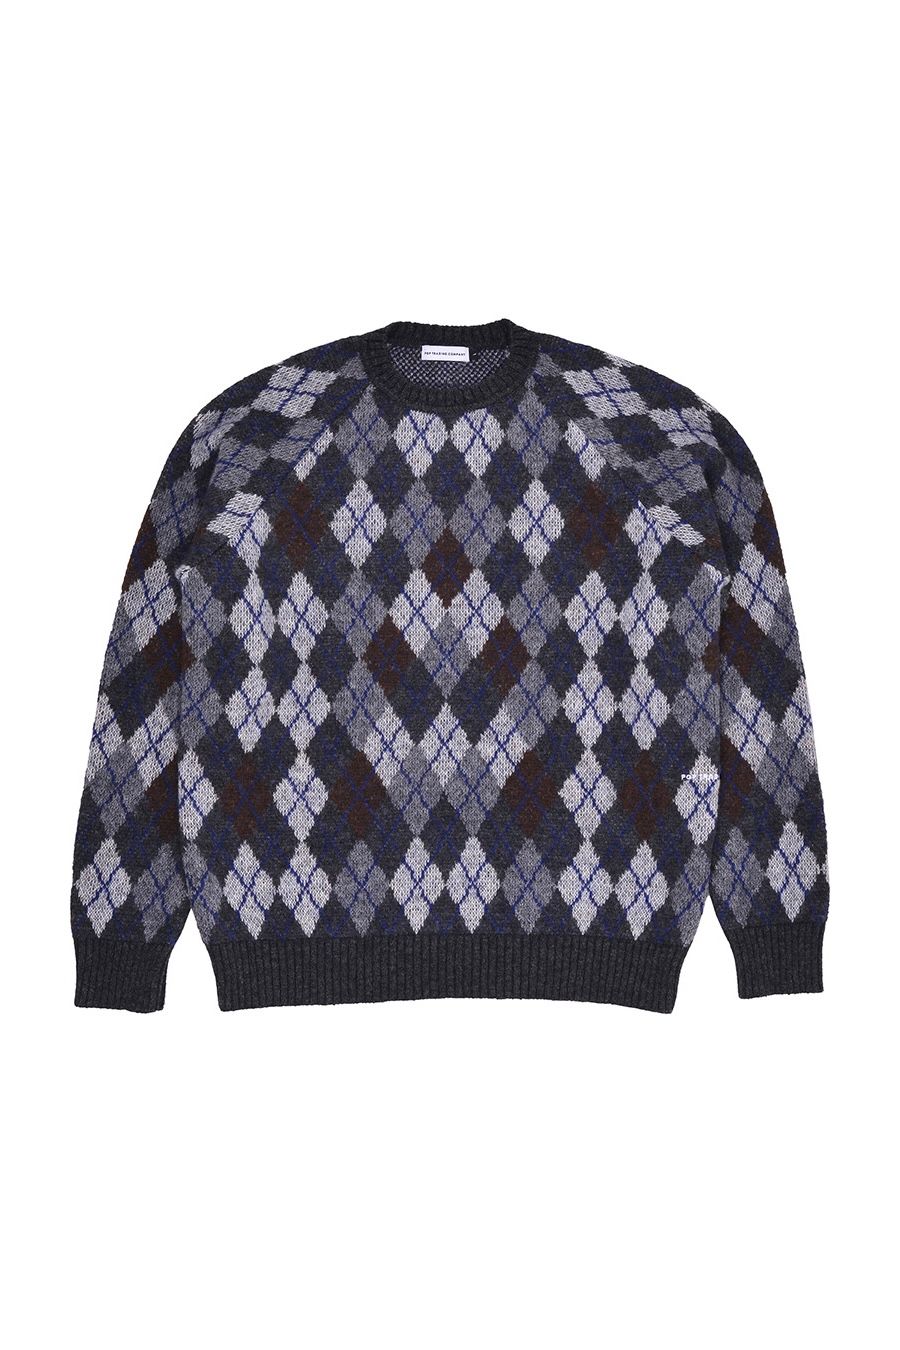 Pop Trading Company - burlington knitted crewneck -anthracite 